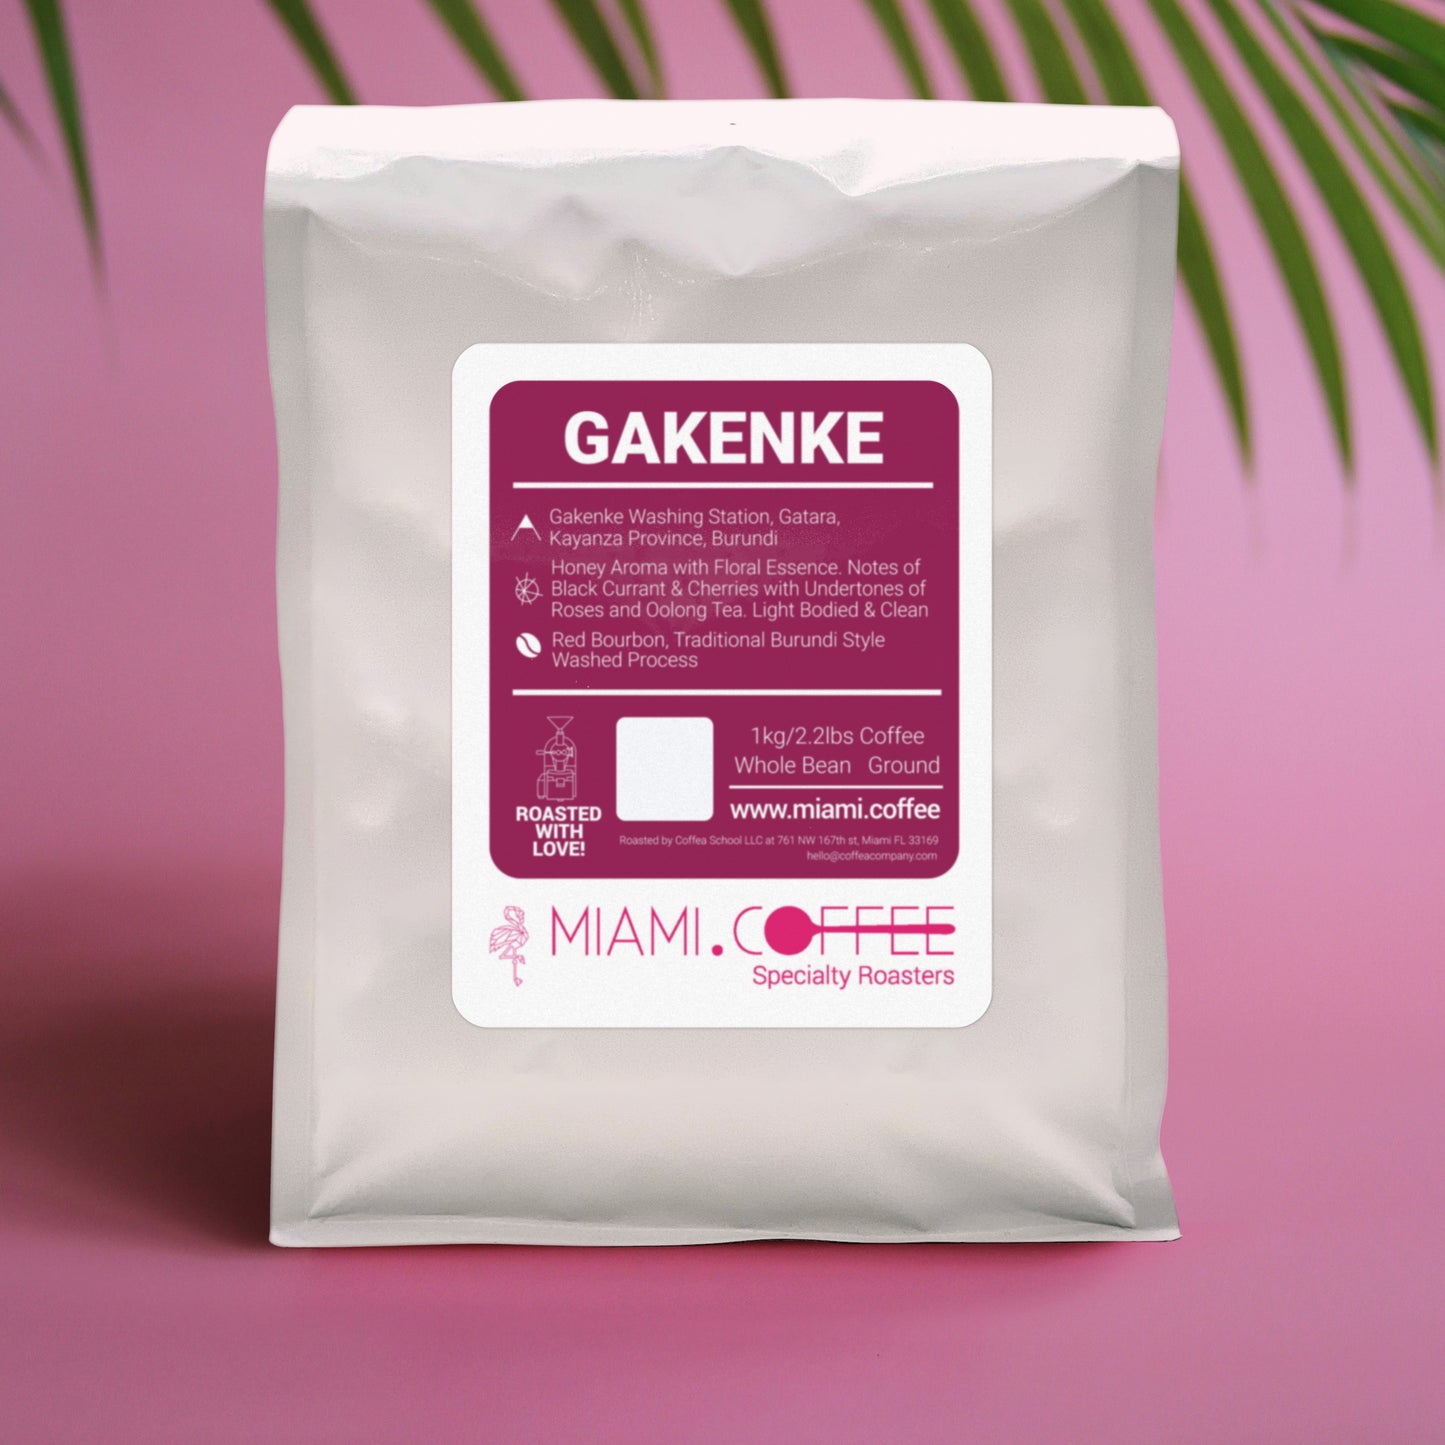 1kg bag of Miami.Coffee Burundi, Gakenke Processing station near Gatara in the Kayanza Province, Bourbon cultivar, washed process, tasting notes: Black Currant, Rose, Oolong